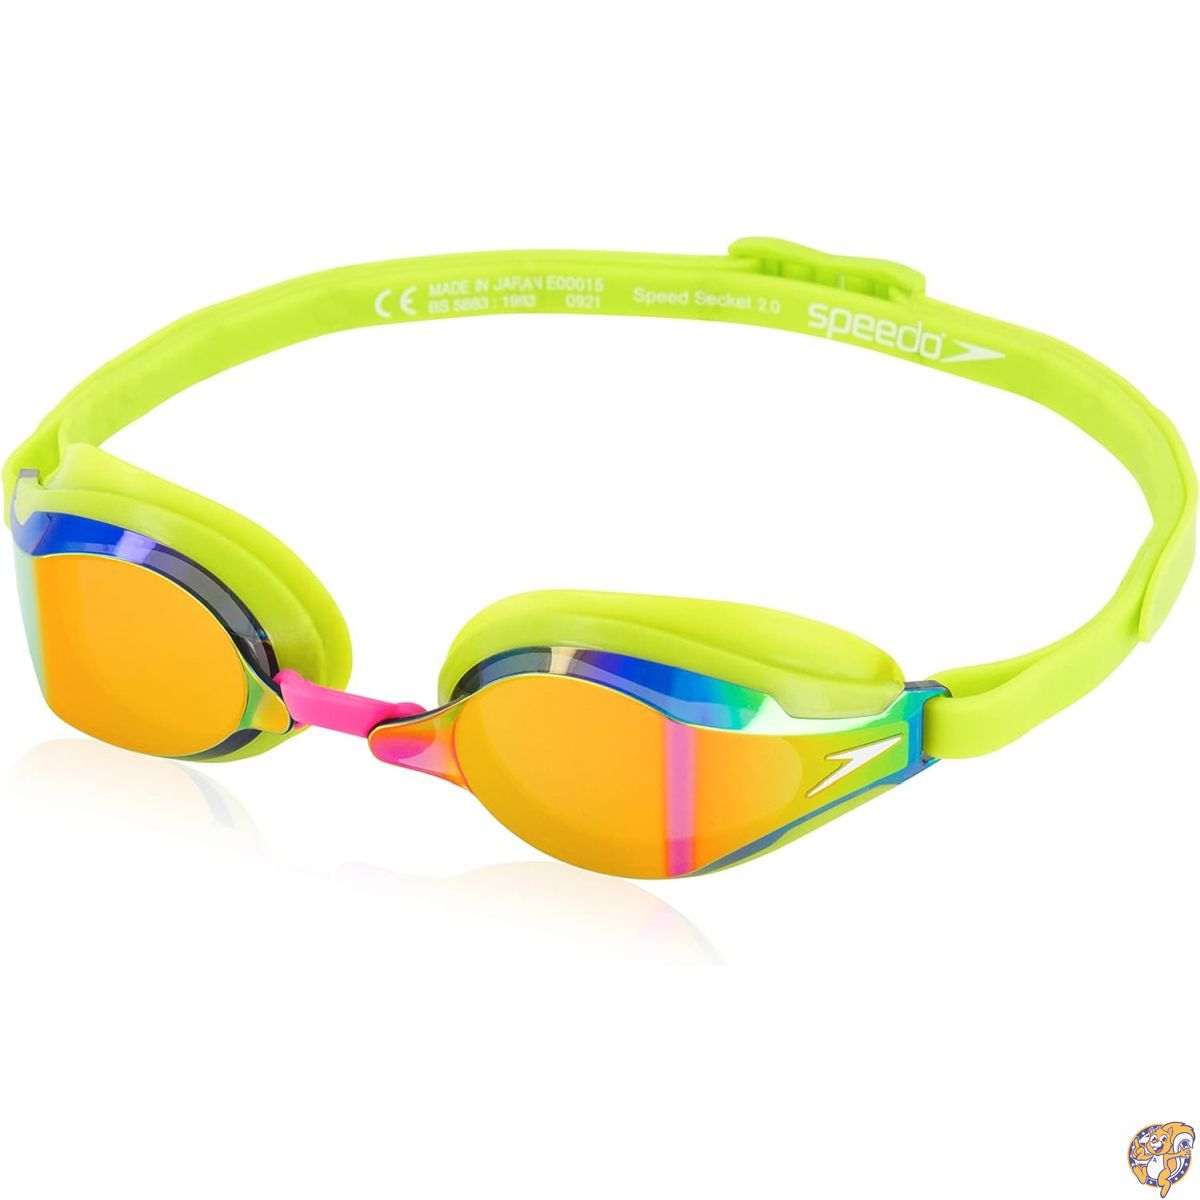 Heywood Speedo Unisex-Adult Swim Goggles Speed Socket 2.0, Lime Green/Smoke/Ablaze Mirrored